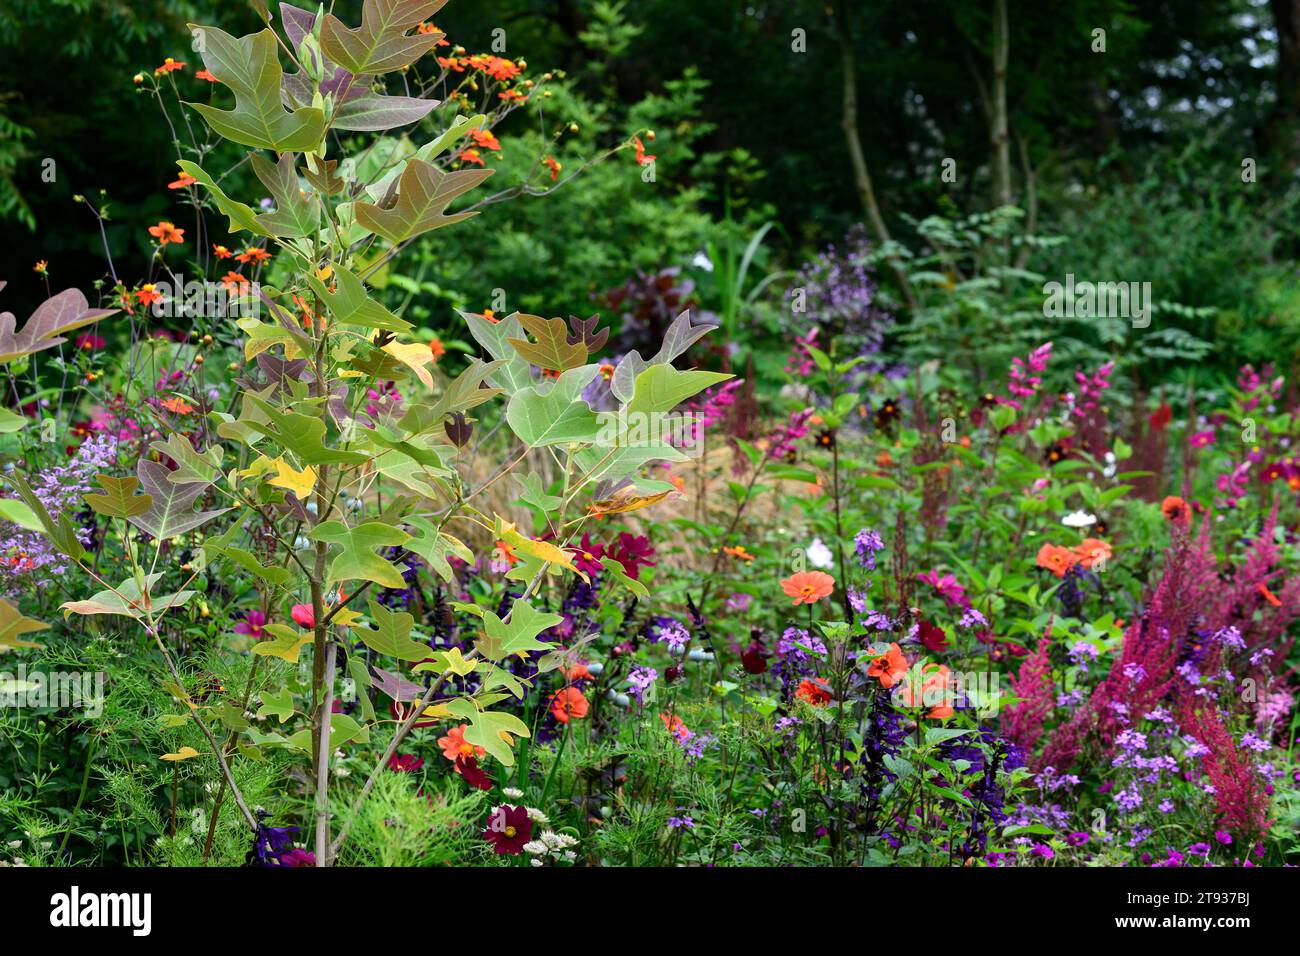 Liriodendron chinense,Astilbe chinensis var taquetii Purpurlanze; Geranium Anne Thomson; cosmos dazzler; Salvia guaranitica Black and Blue; pink purpl Stock Photo